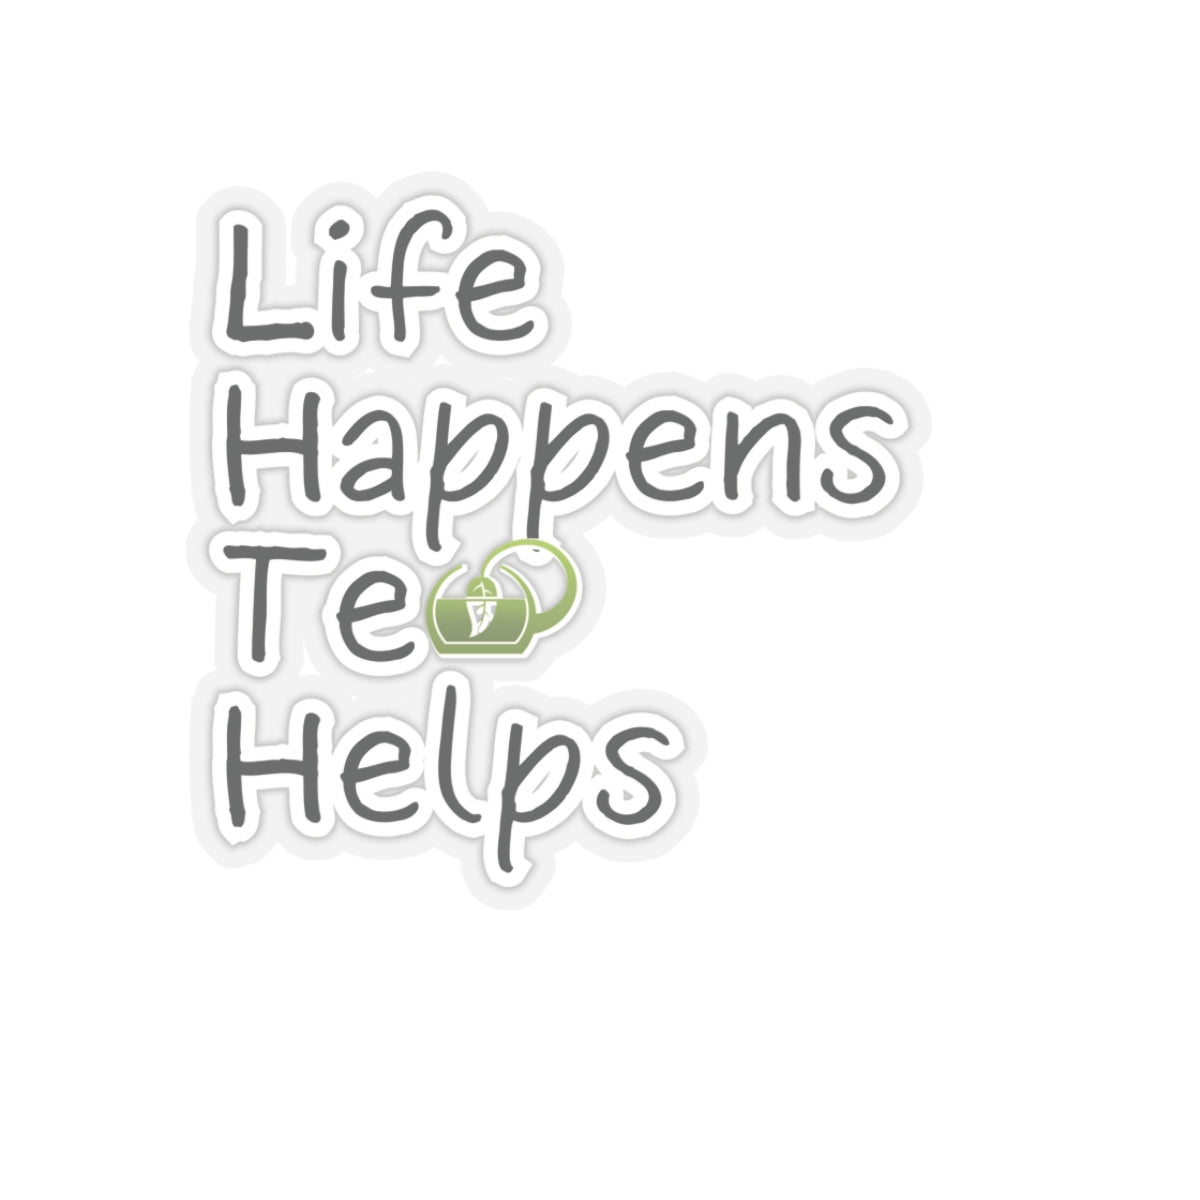 Life Happens Tea Helps Inspirational Quote Kiss-Cut Stickers-Paper products-3" × 3"-Transparent-mysticalcherry